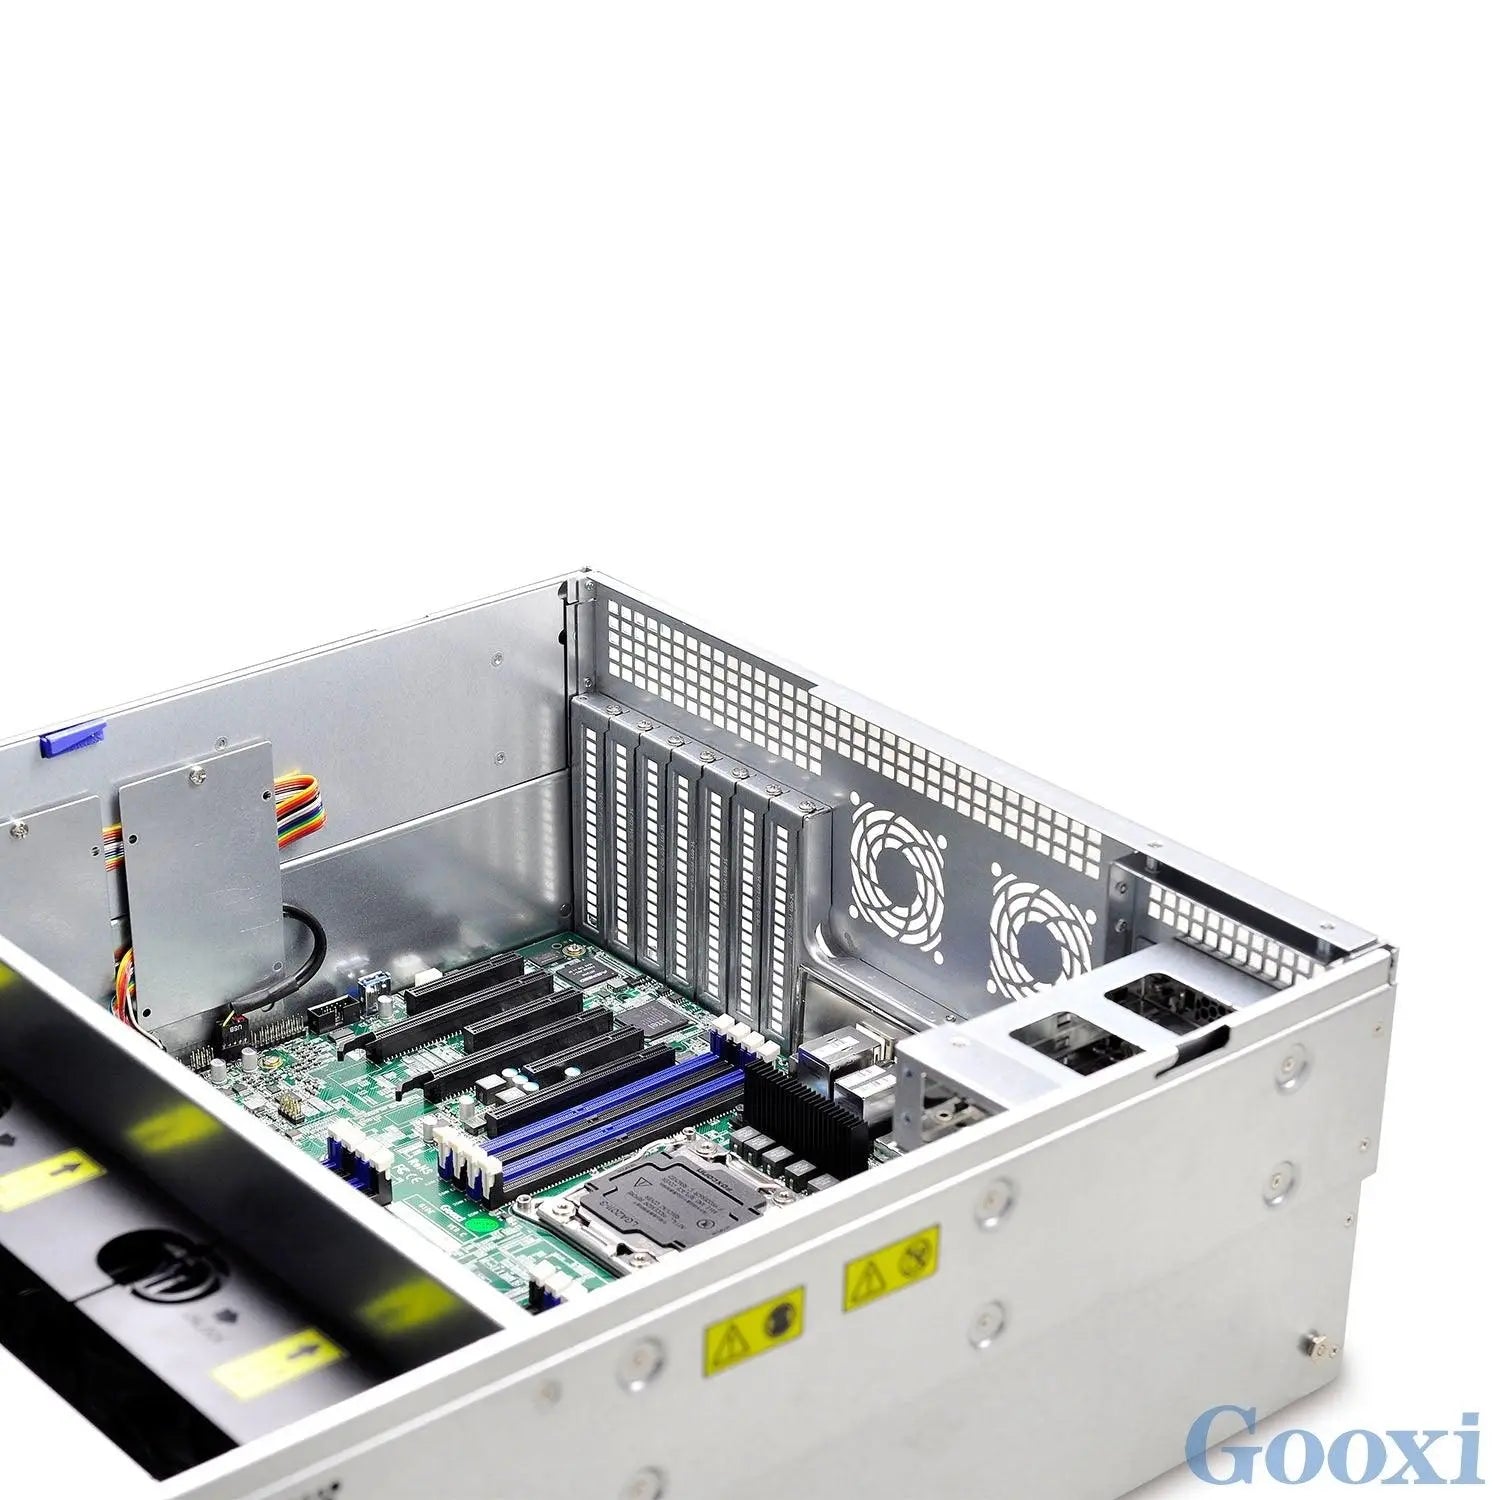 Gooxi RMC4124-670-HSE -R   With Redundant Psu - X-Case